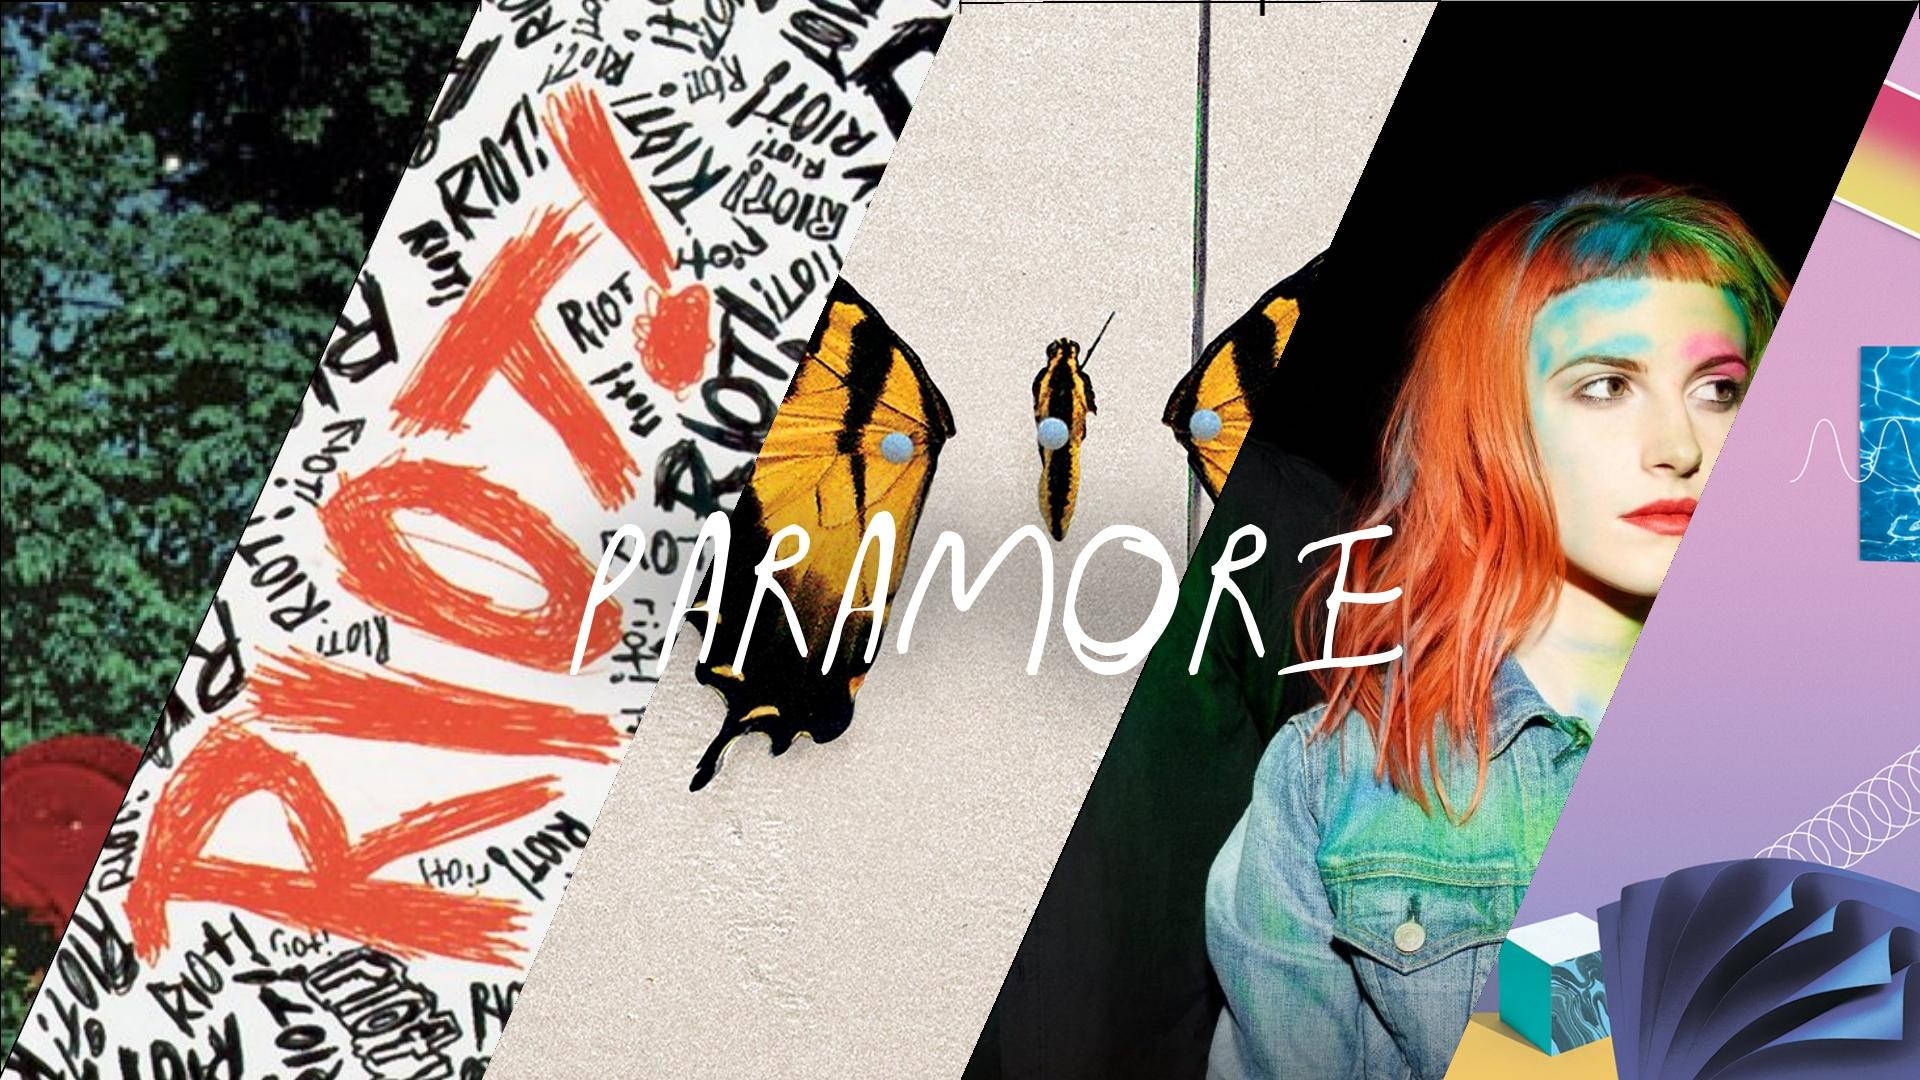 Paramore Band Music Album Cover wallpaper.